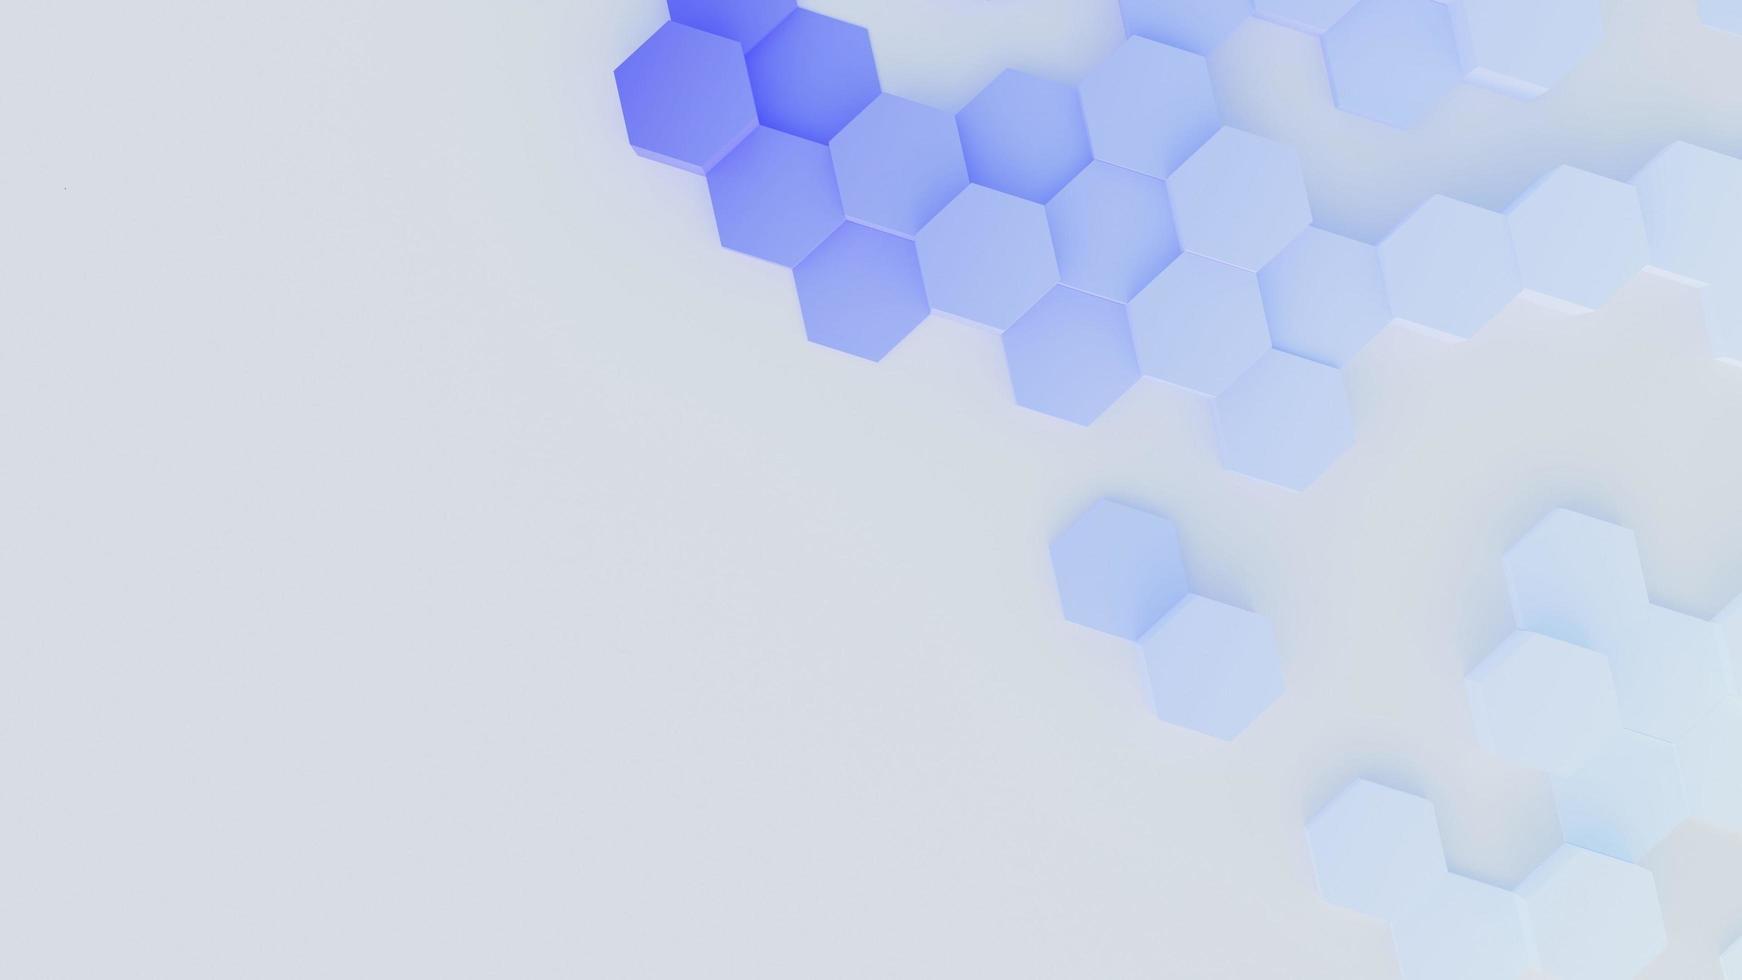 blue hexagon wallpaper design, 3D rendering photo